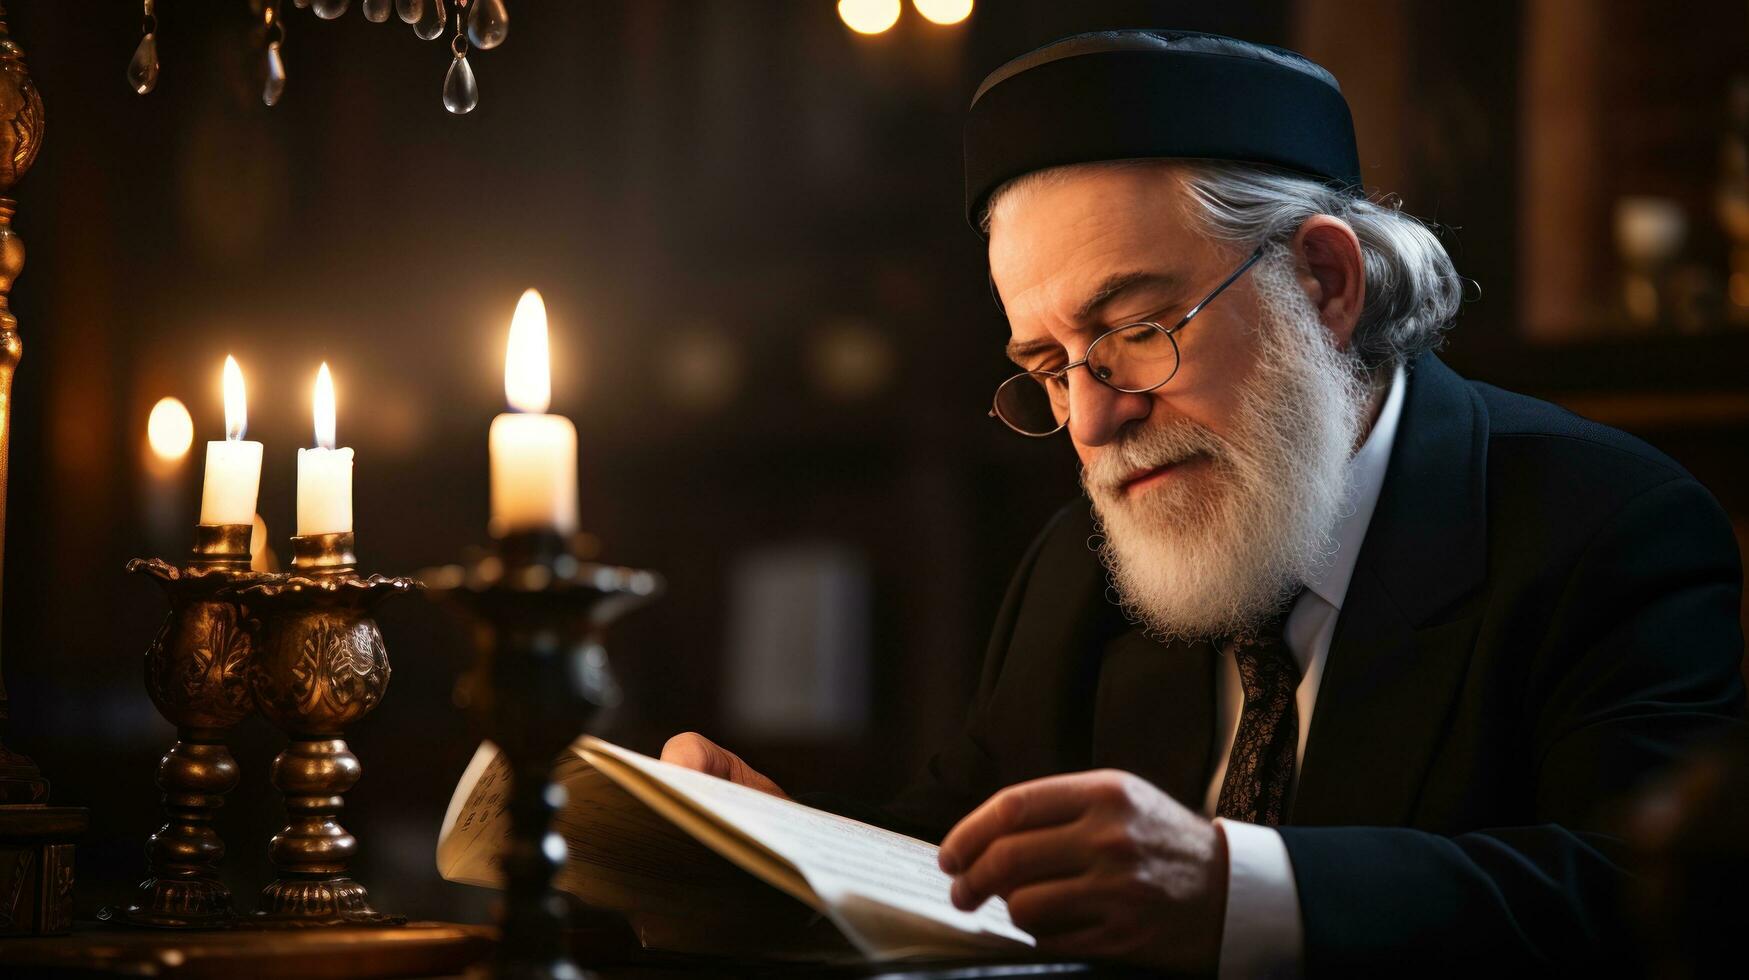 Rabbi reading Torah in synagogue on Hanukkah photo